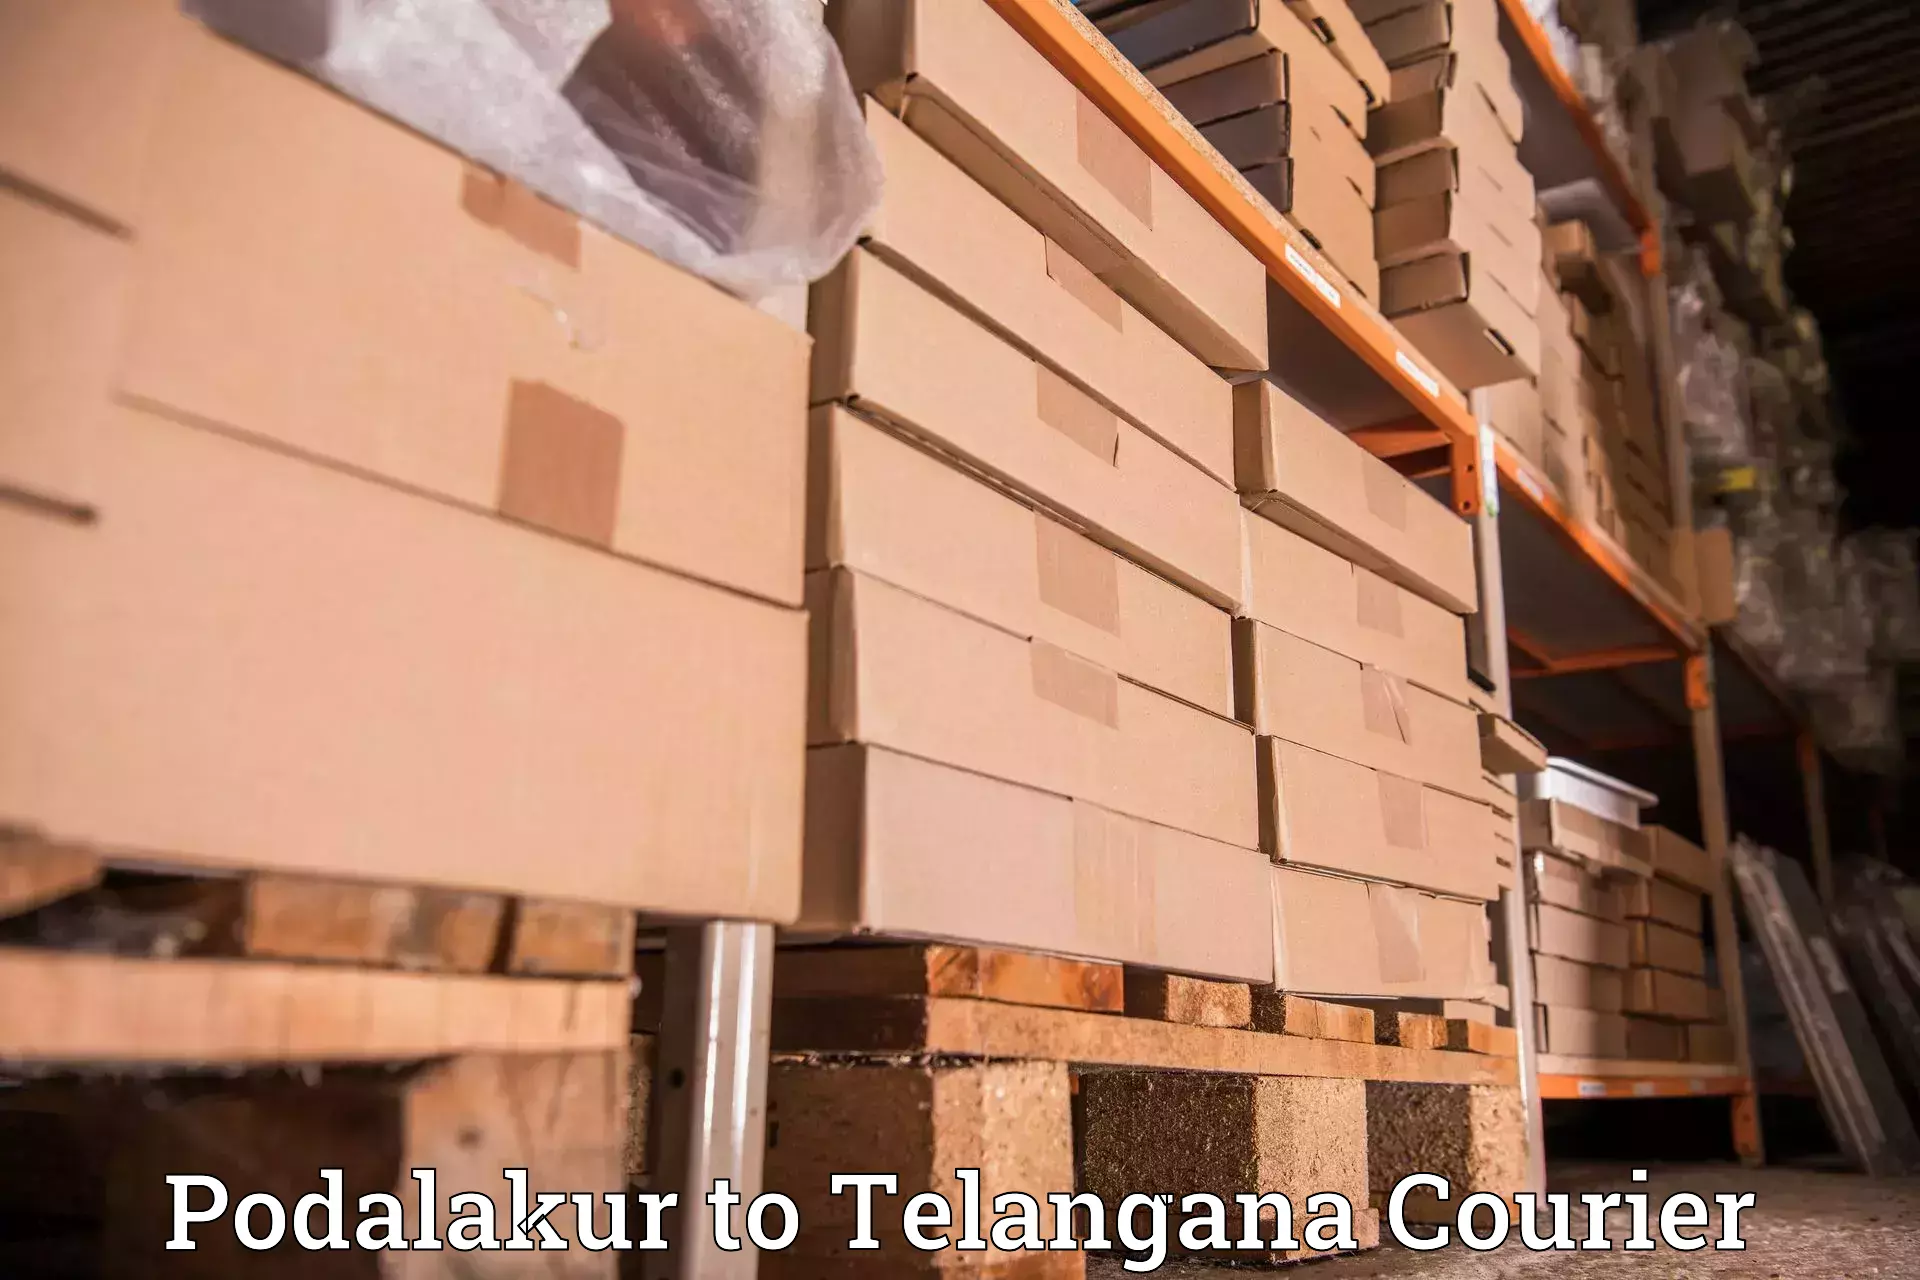 Courier service efficiency Podalakur to Sujatha Nagar